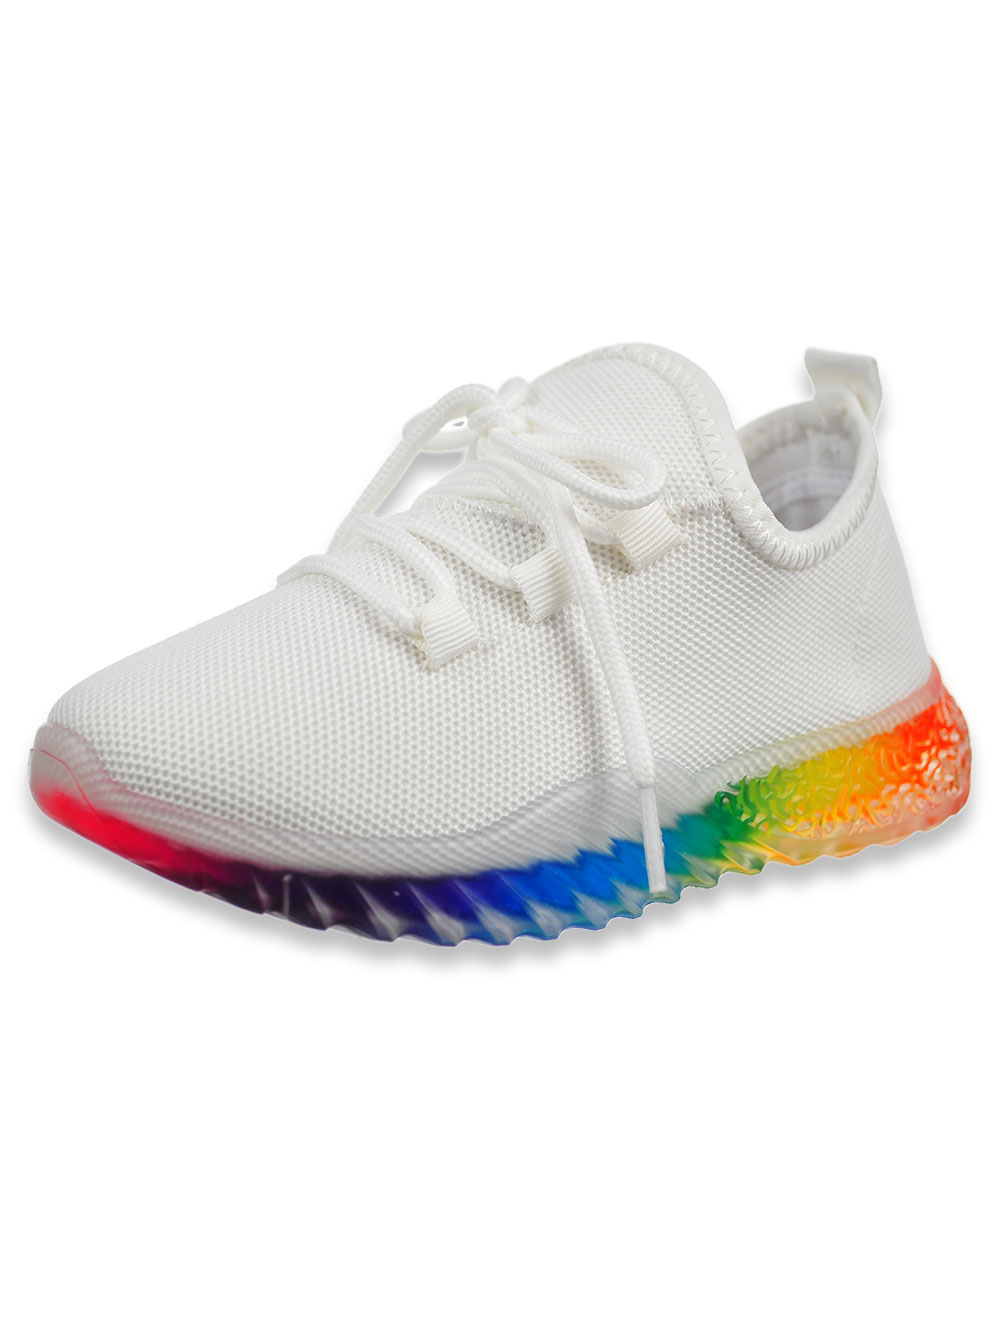 Girls Rainbow Sneakers